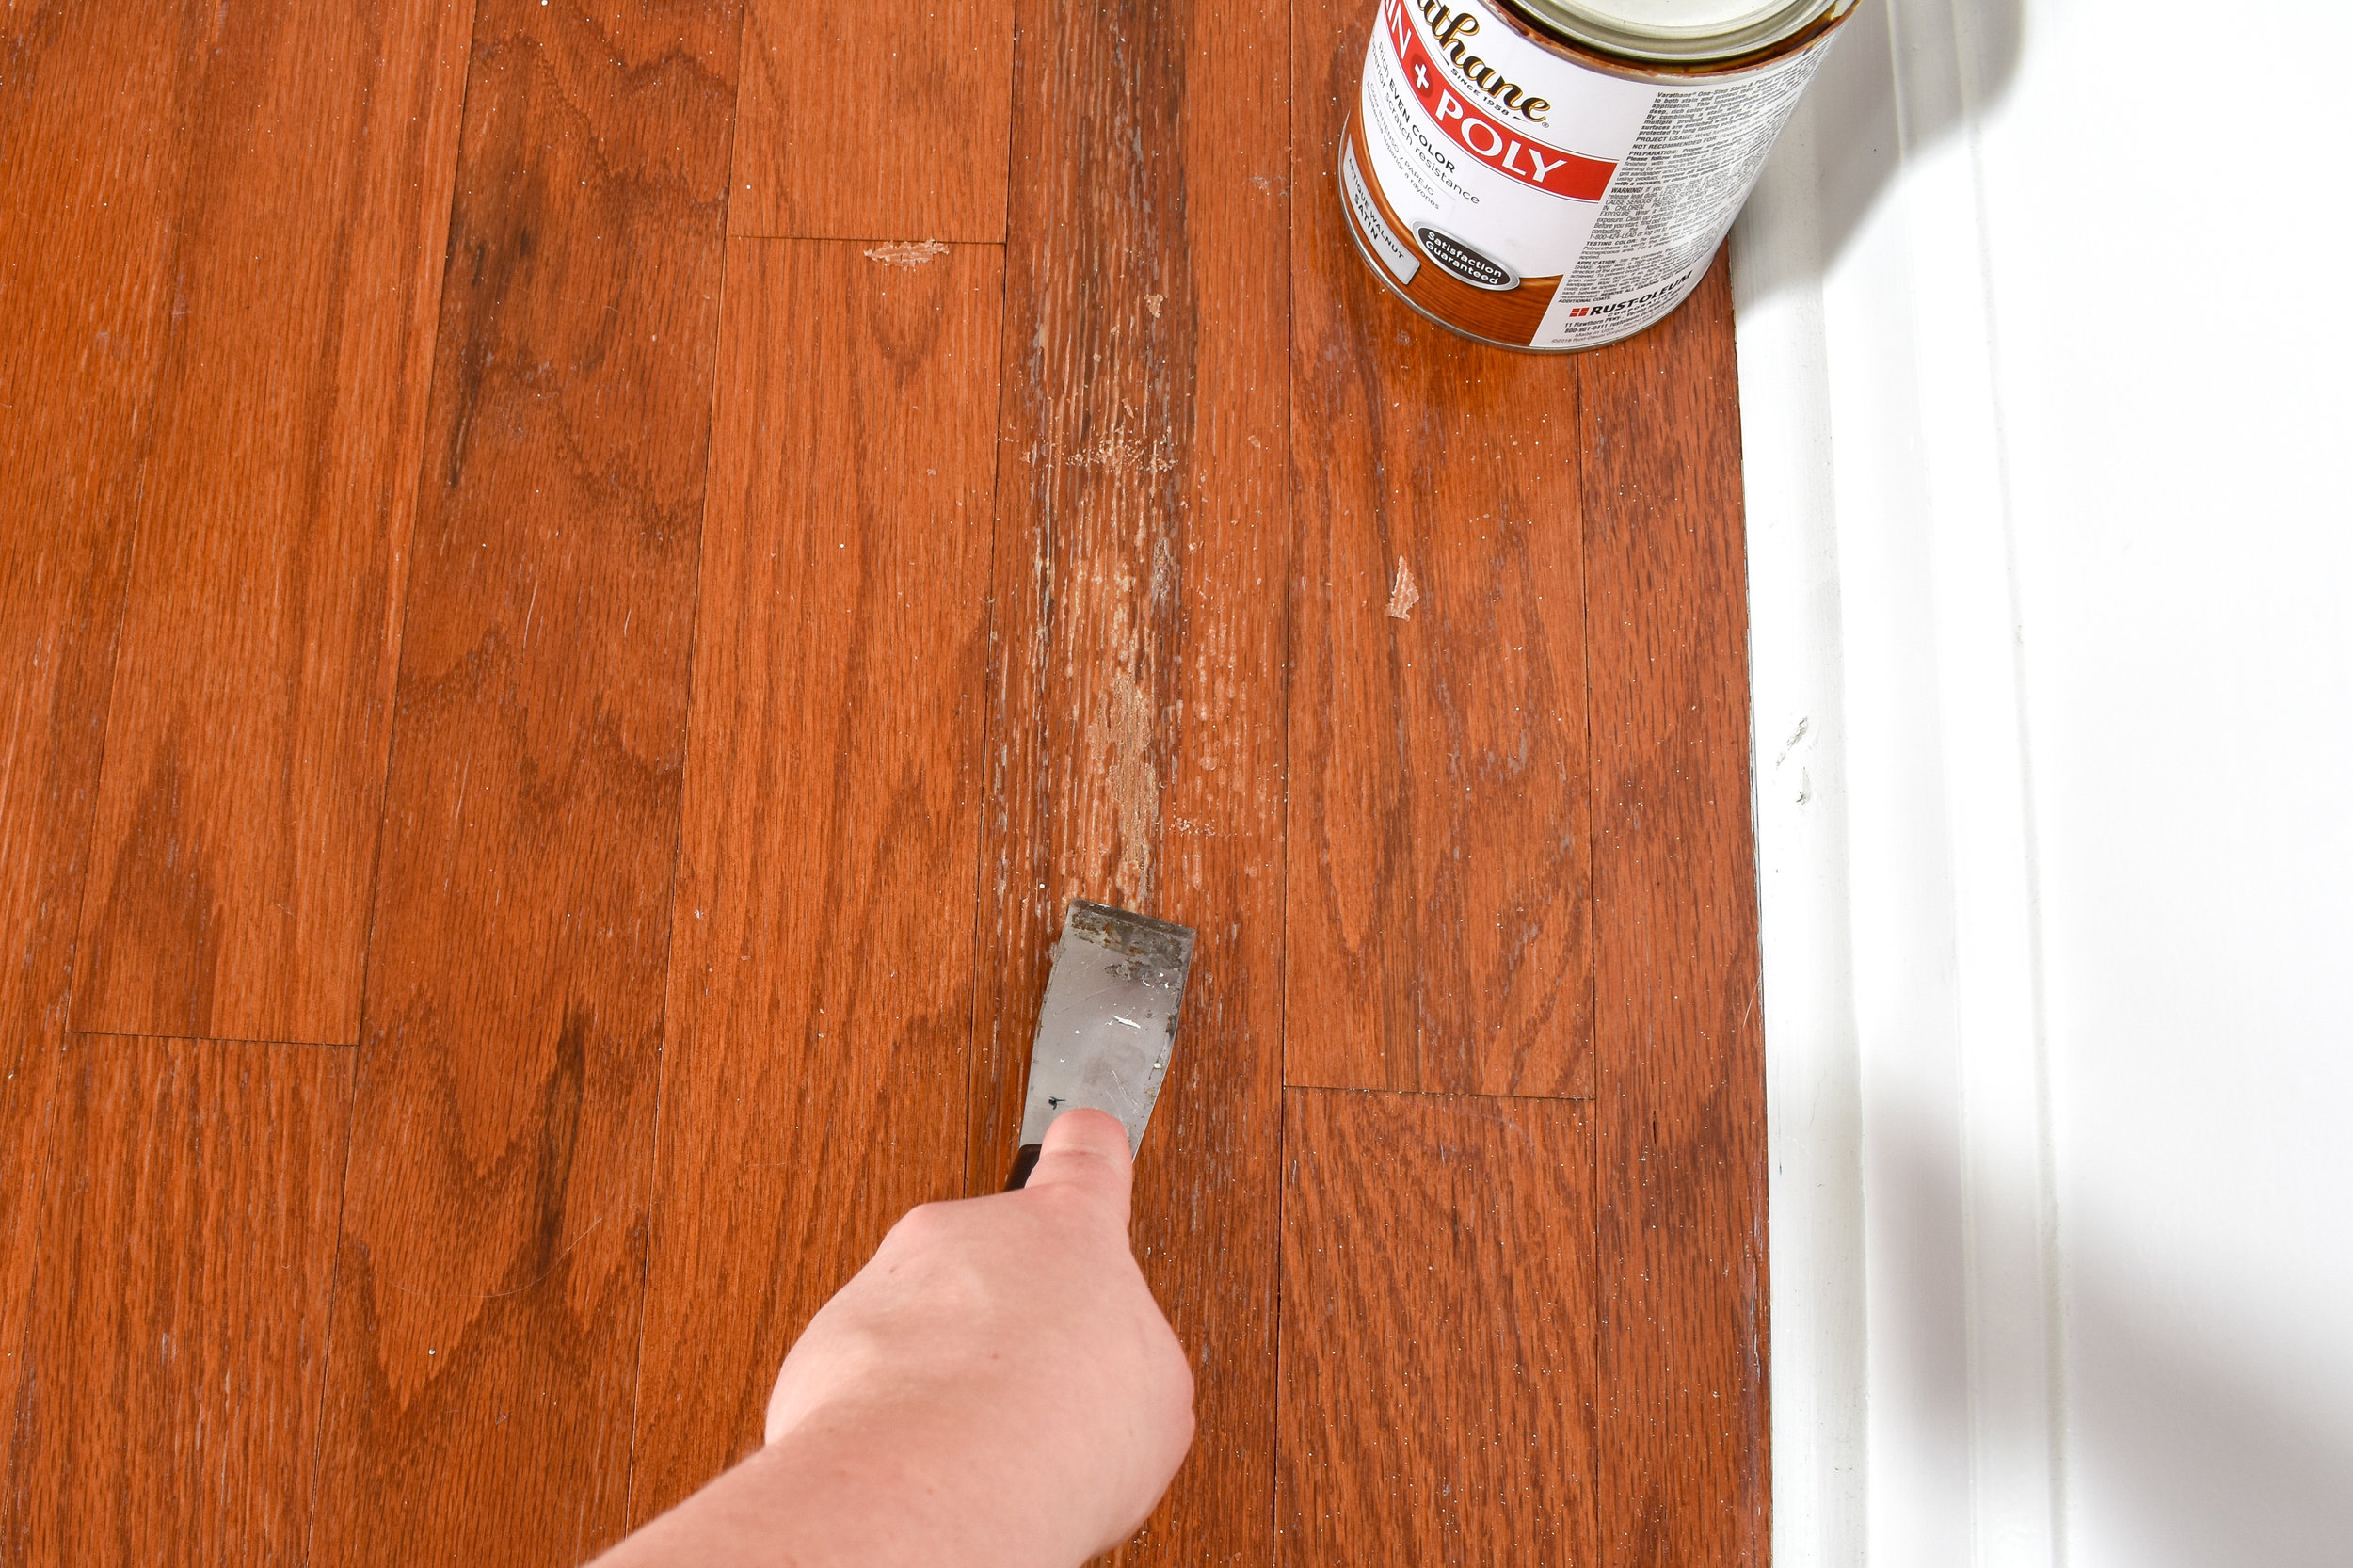 How To Make Old Hardwood Floors Shine, What Not To Use On Hardwood Floors